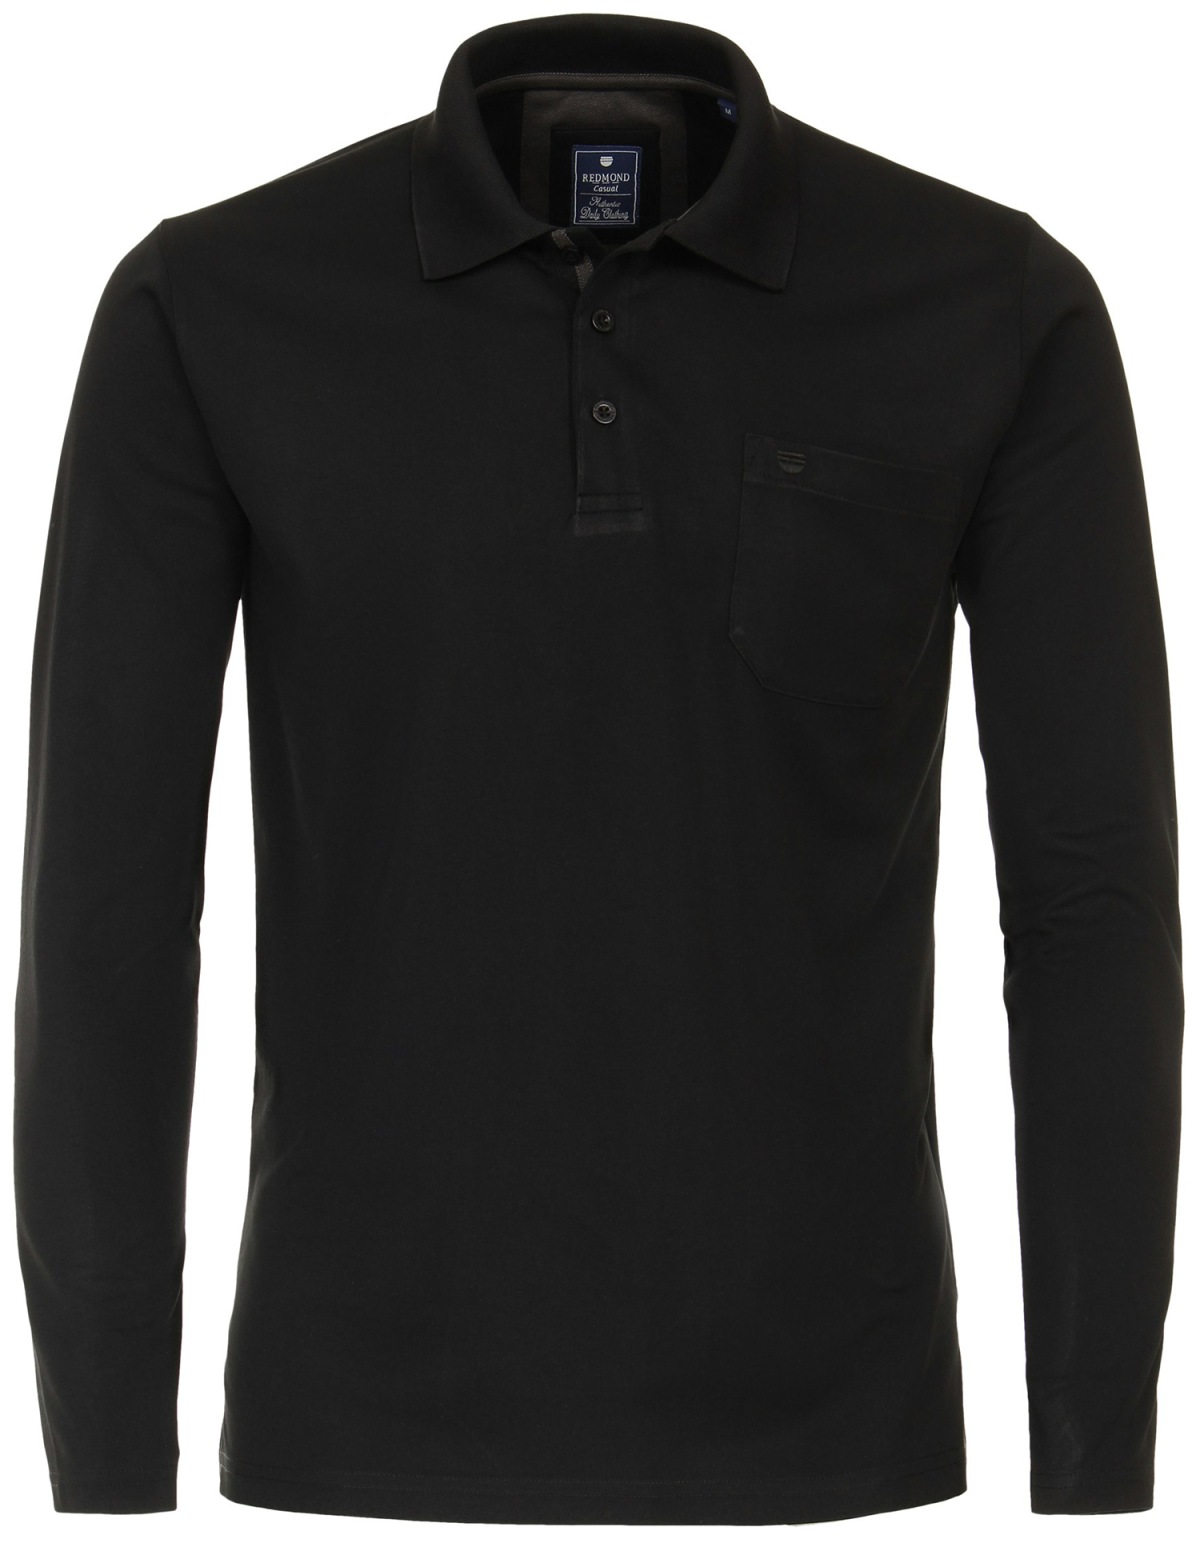 Redmond - Poloshirt - Regular Fit - Langarm - Wash and Wear - schwarz